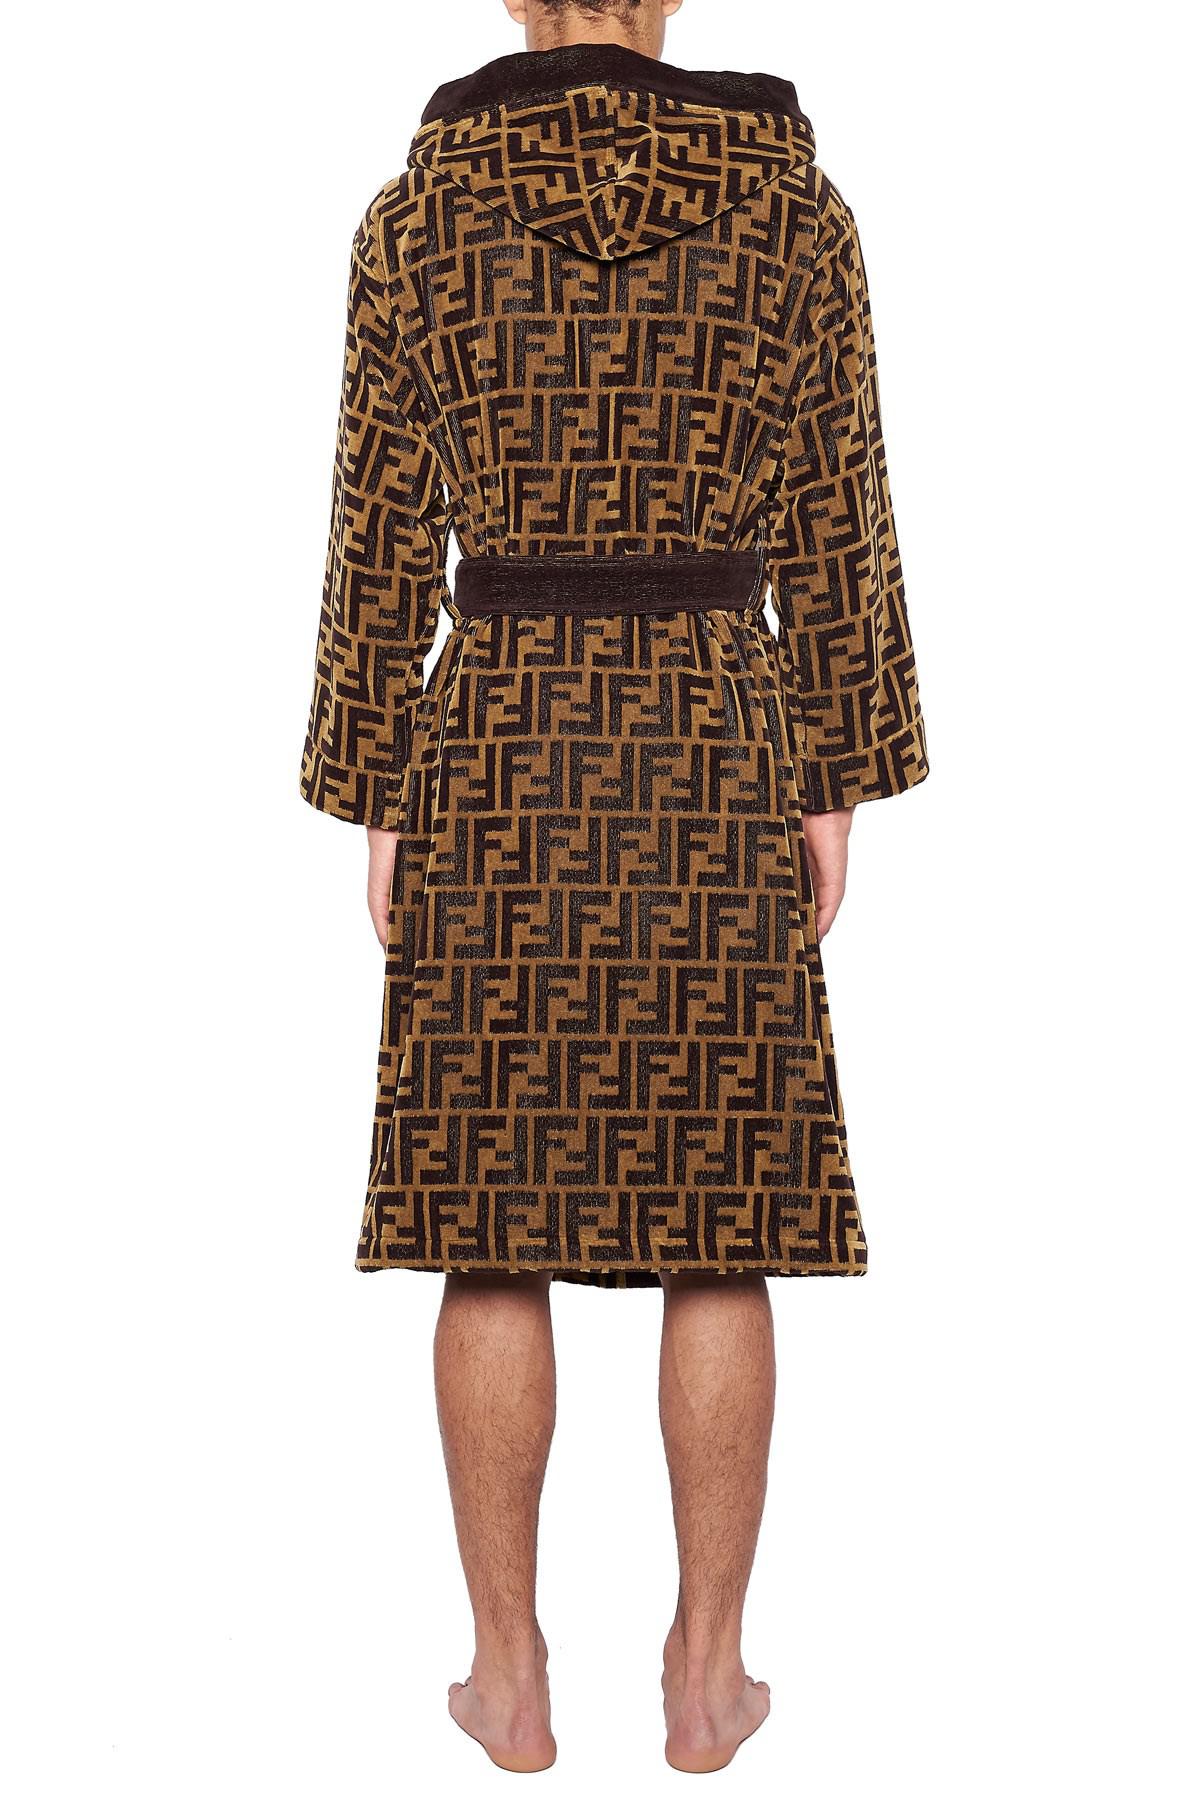 Fendi Jacquard Ff Logo Robe in Brown for Men - Lyst